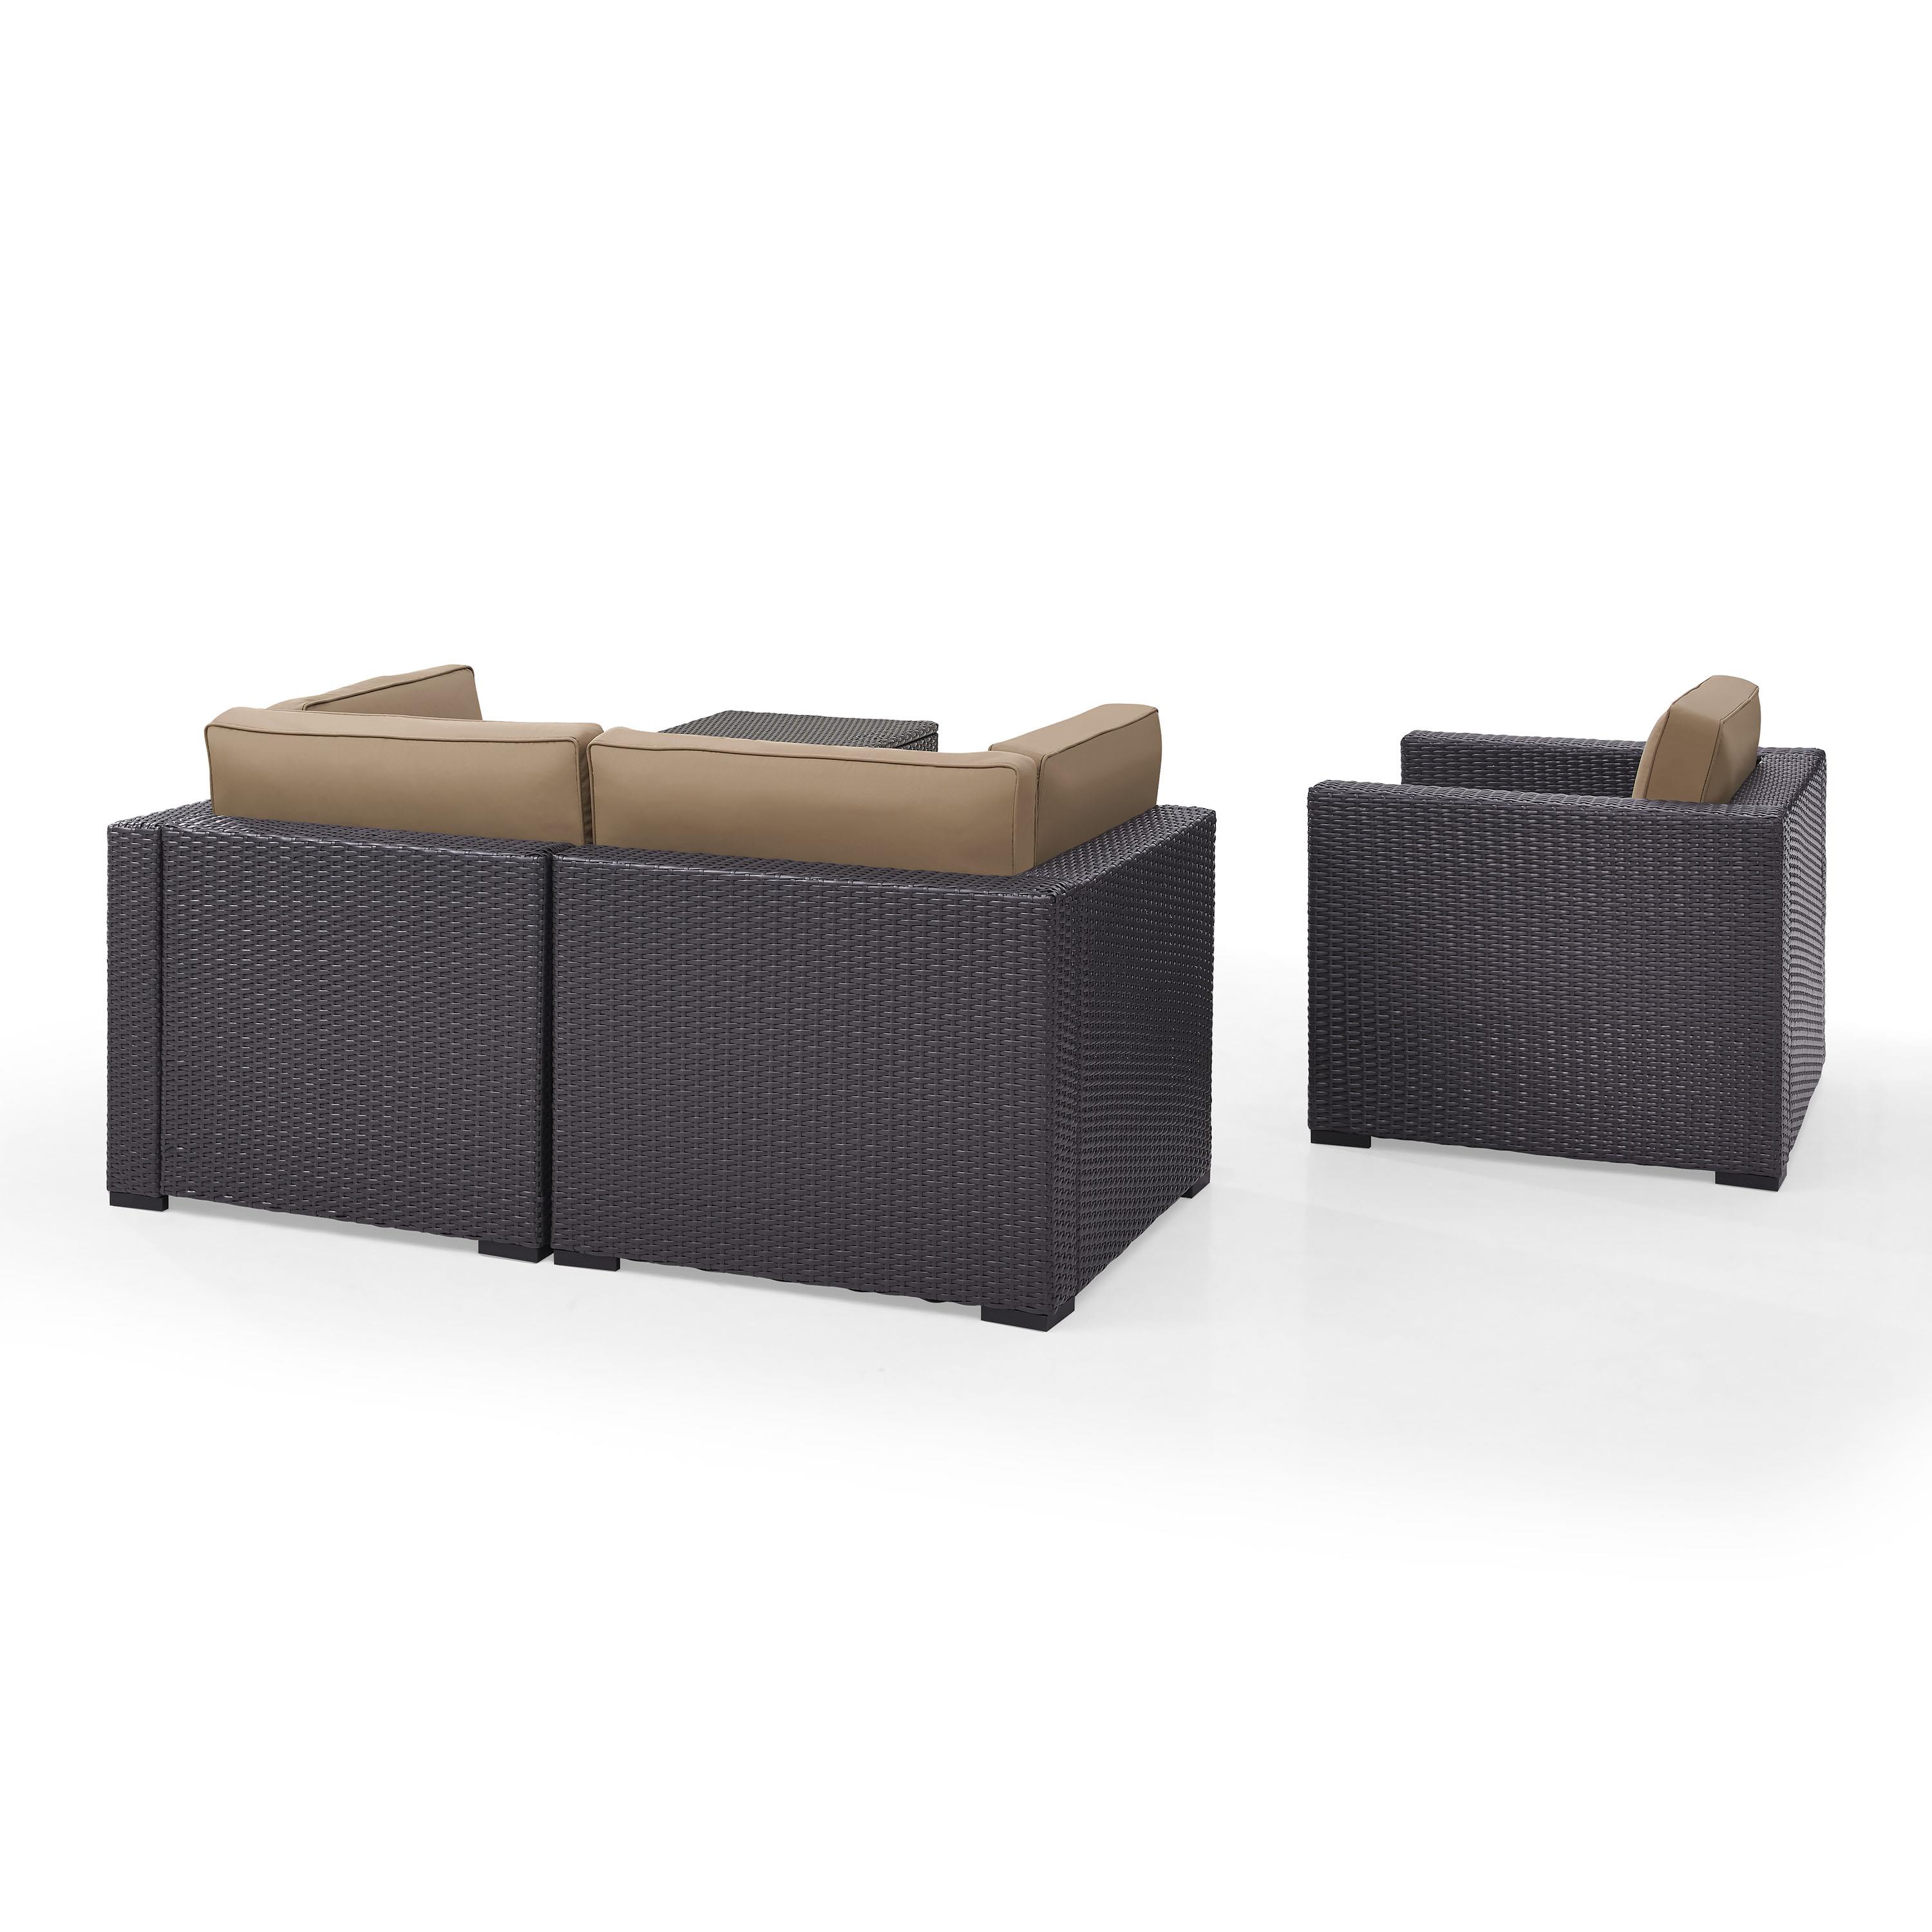 Crosley Furniture Biscayne 4 Piece Metal Patio Sofa Set in Brown/Mocha - image 4 of 4